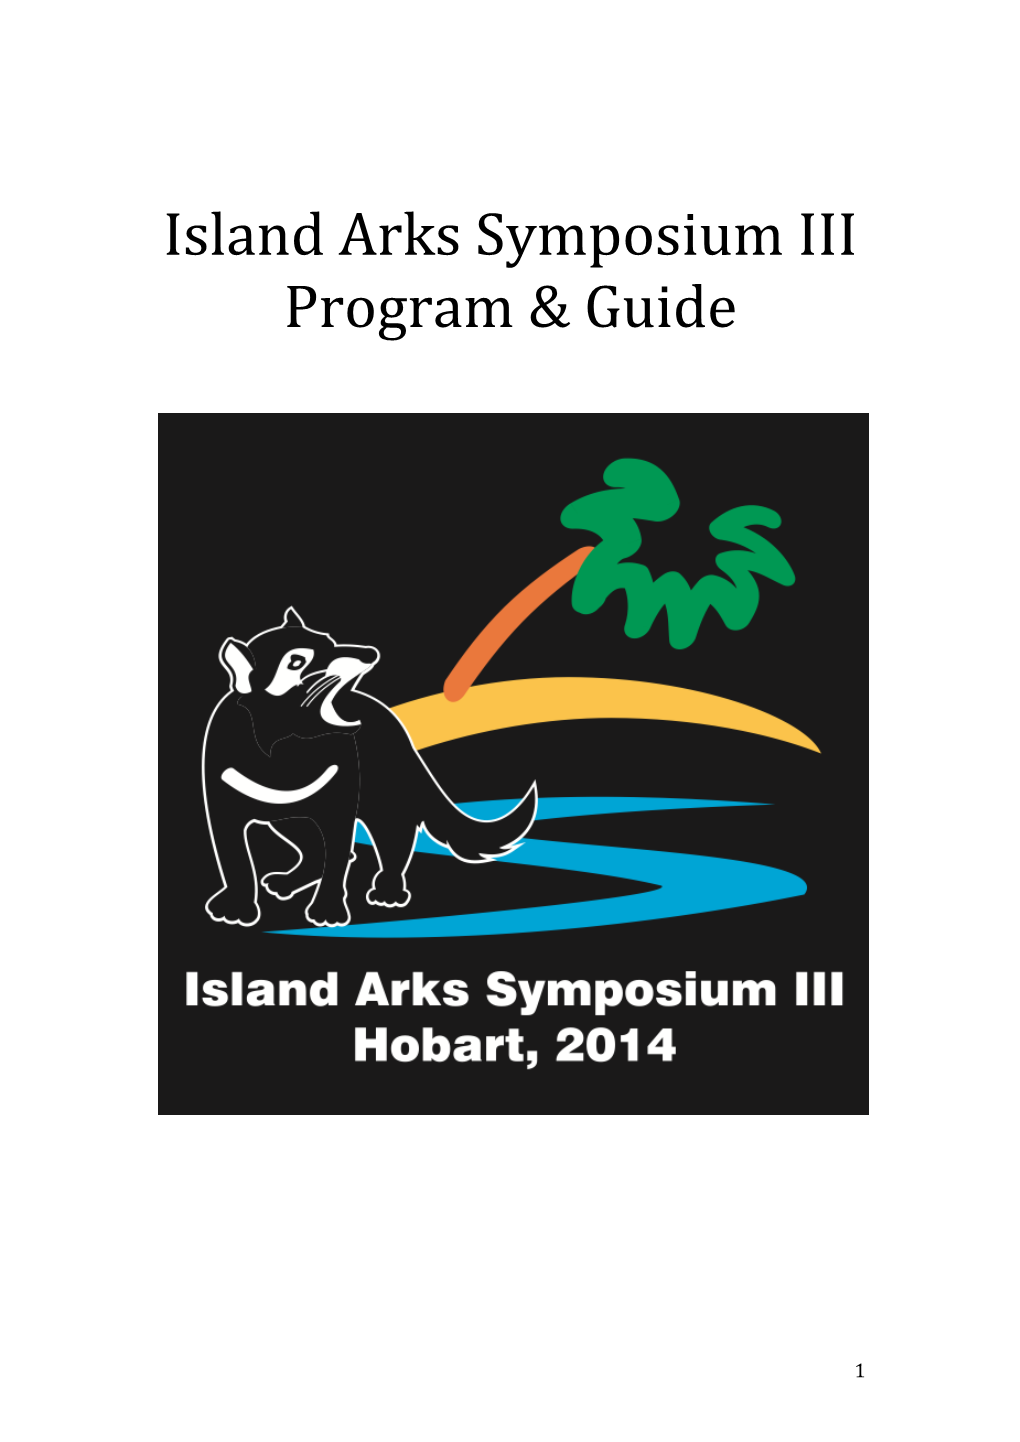 Island Arks Symposium III Program & Guide